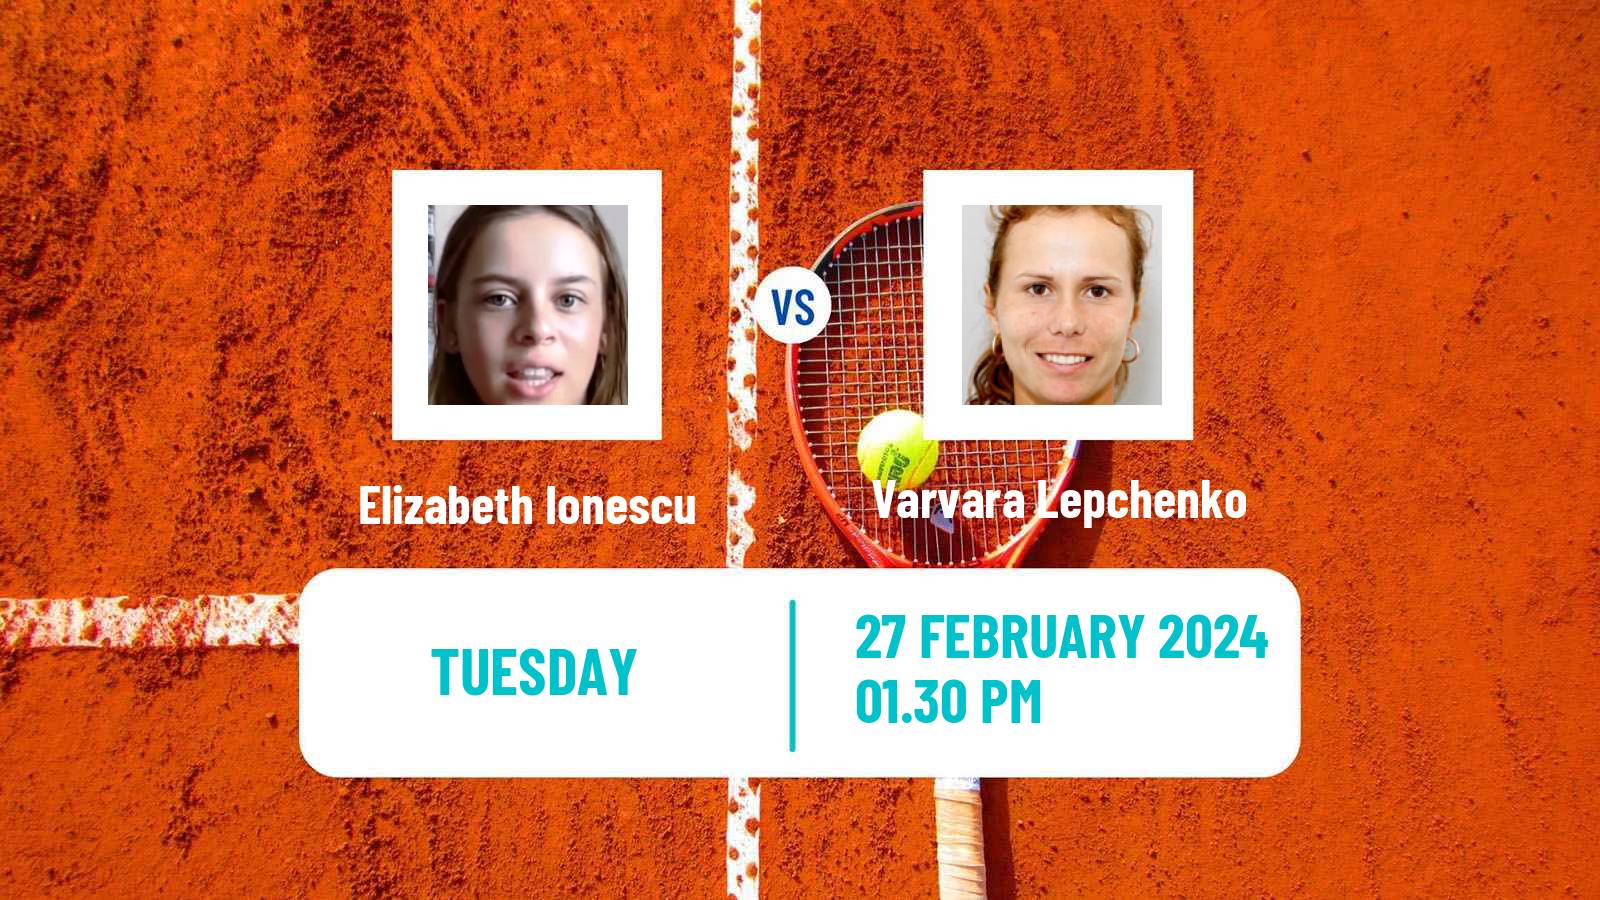 Tennis ITF W35 Spring Tx Women Elizabeth Ionescu - Varvara Lepchenko